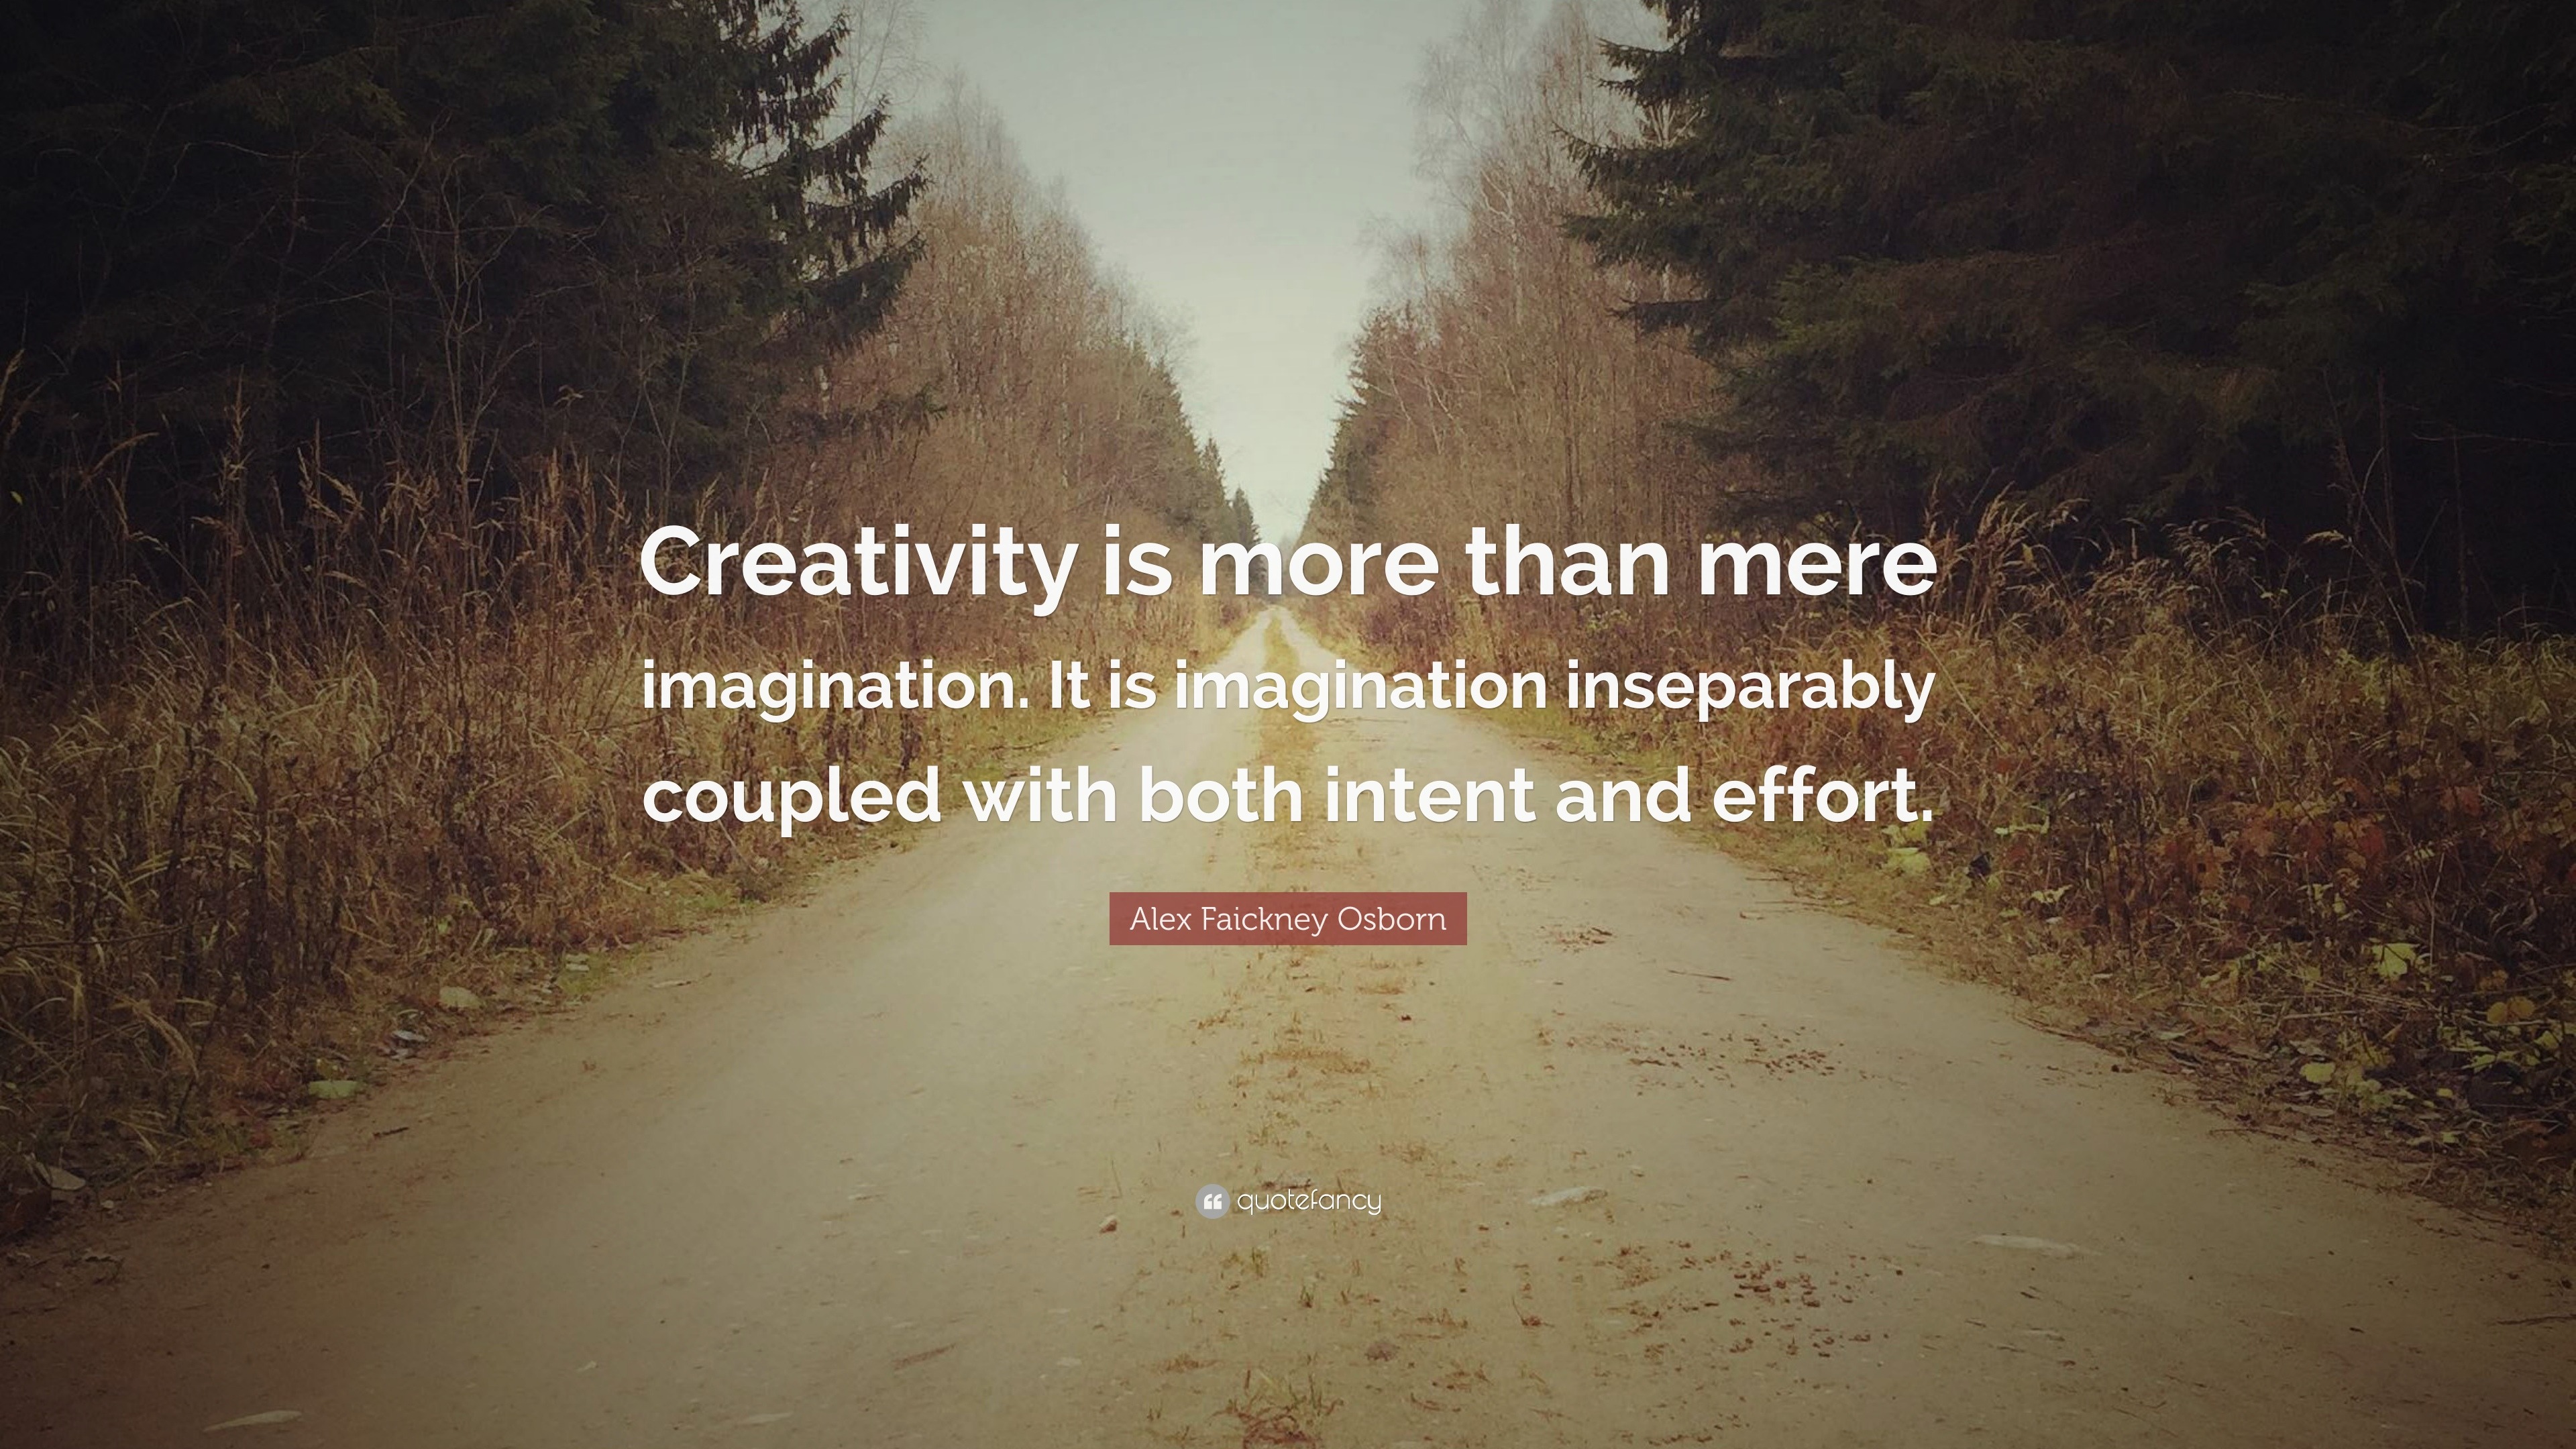 Alex Faickney Osborn Quote “Creativity is more than mere